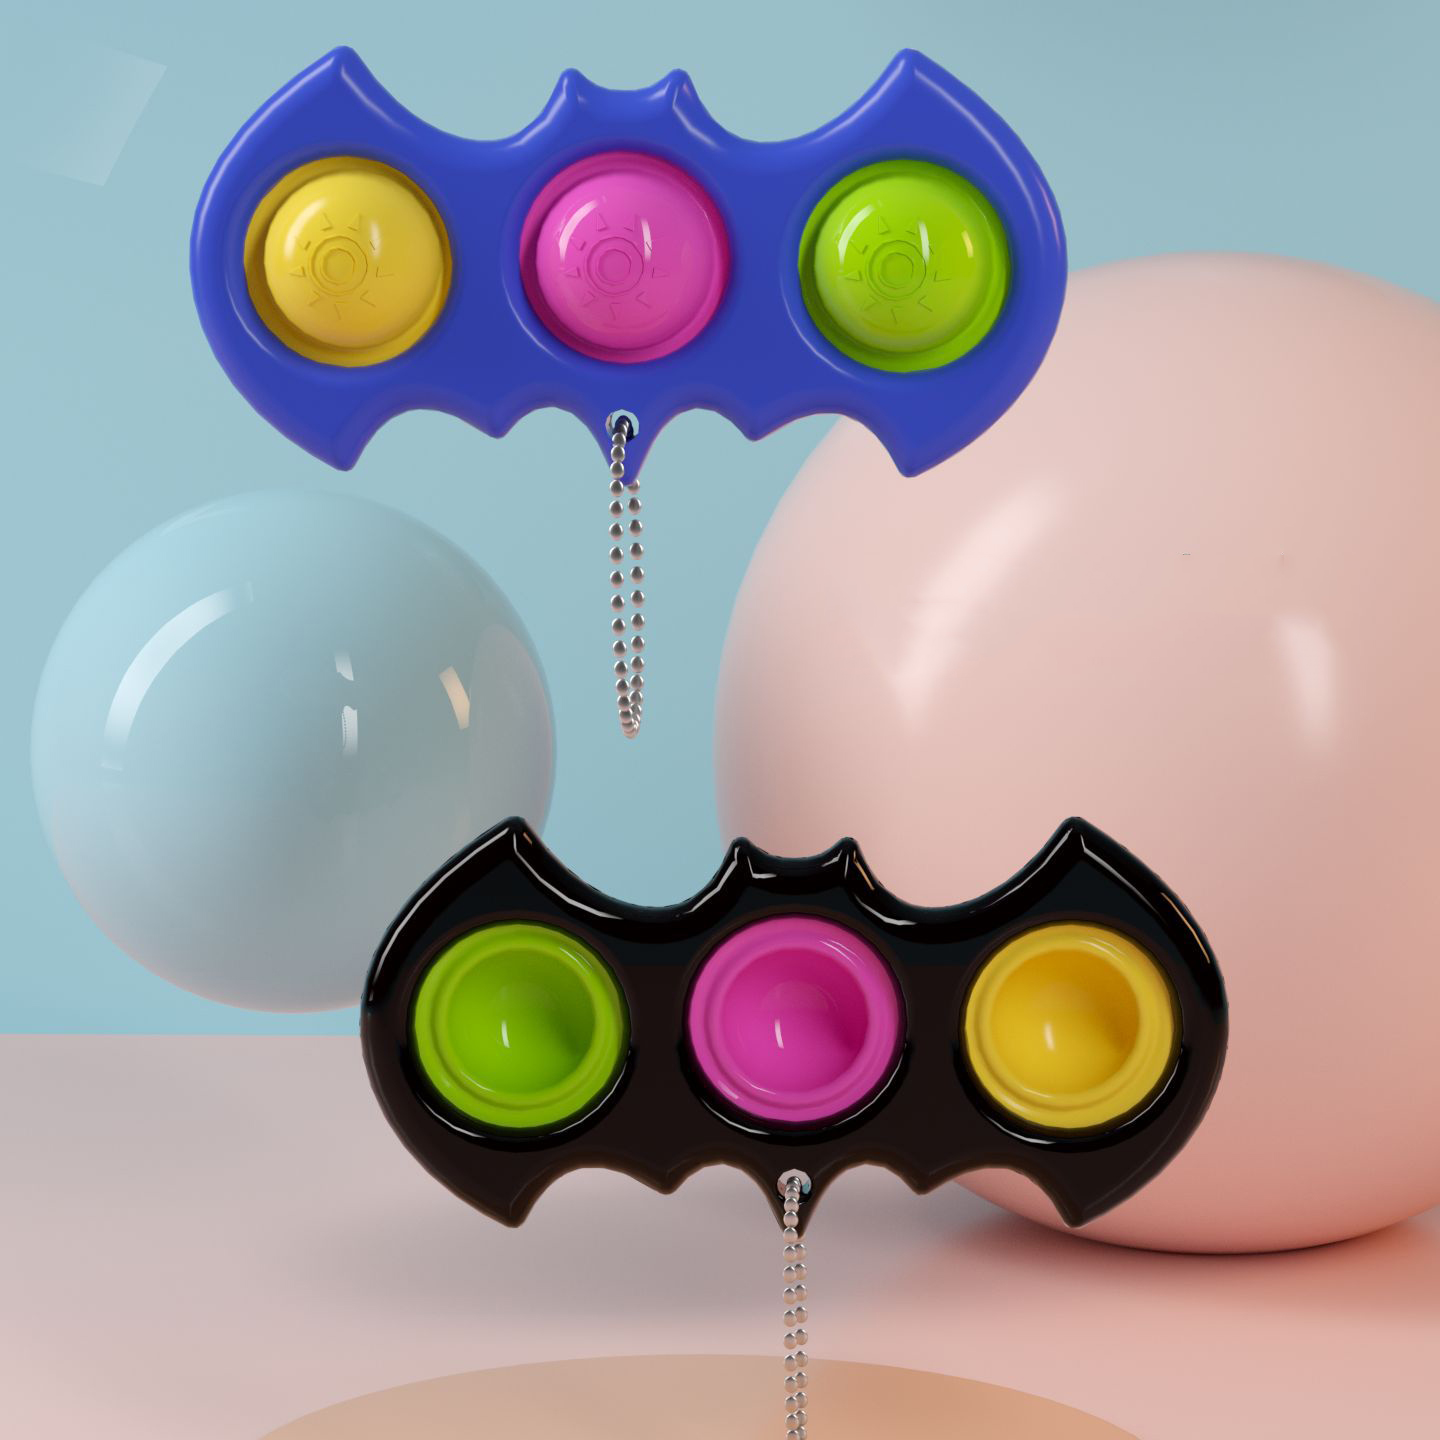 Mini-Bat-Sensory-Fidget-Relaxation-Stress-Relief-Anti-Anxiety-Autism-Hand-EDC-Gadget-for-Kids-Teen-A-1833953-7